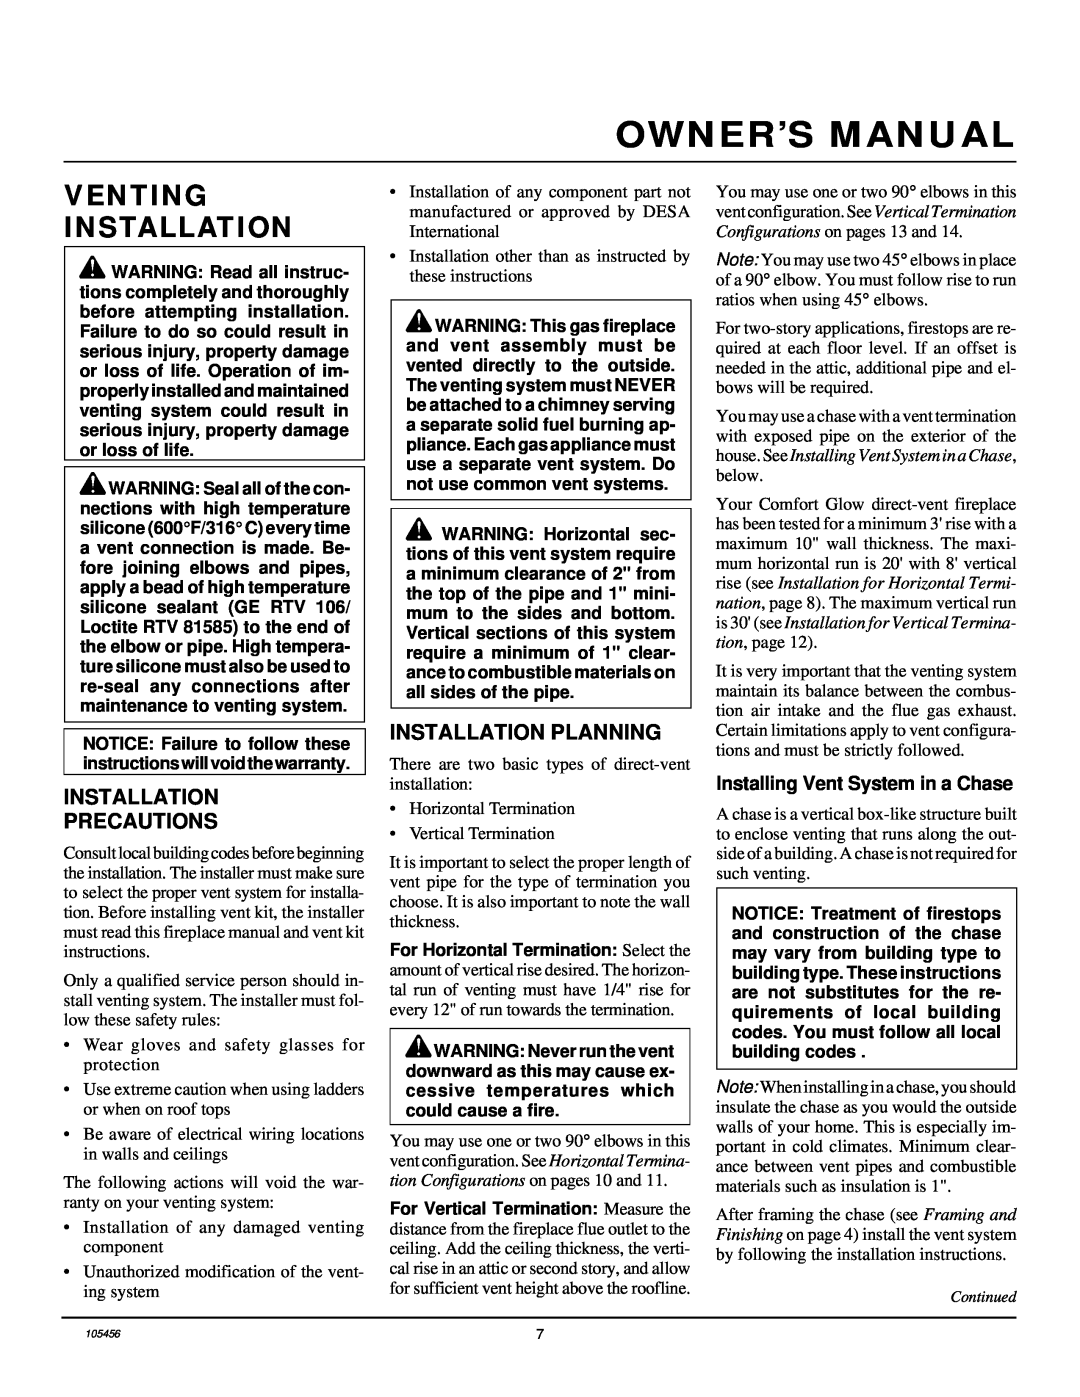 Desa CHDV34(N/P)(A) Venting Installation, Installation Precautions, Installation Planning, Owner’S Manual 